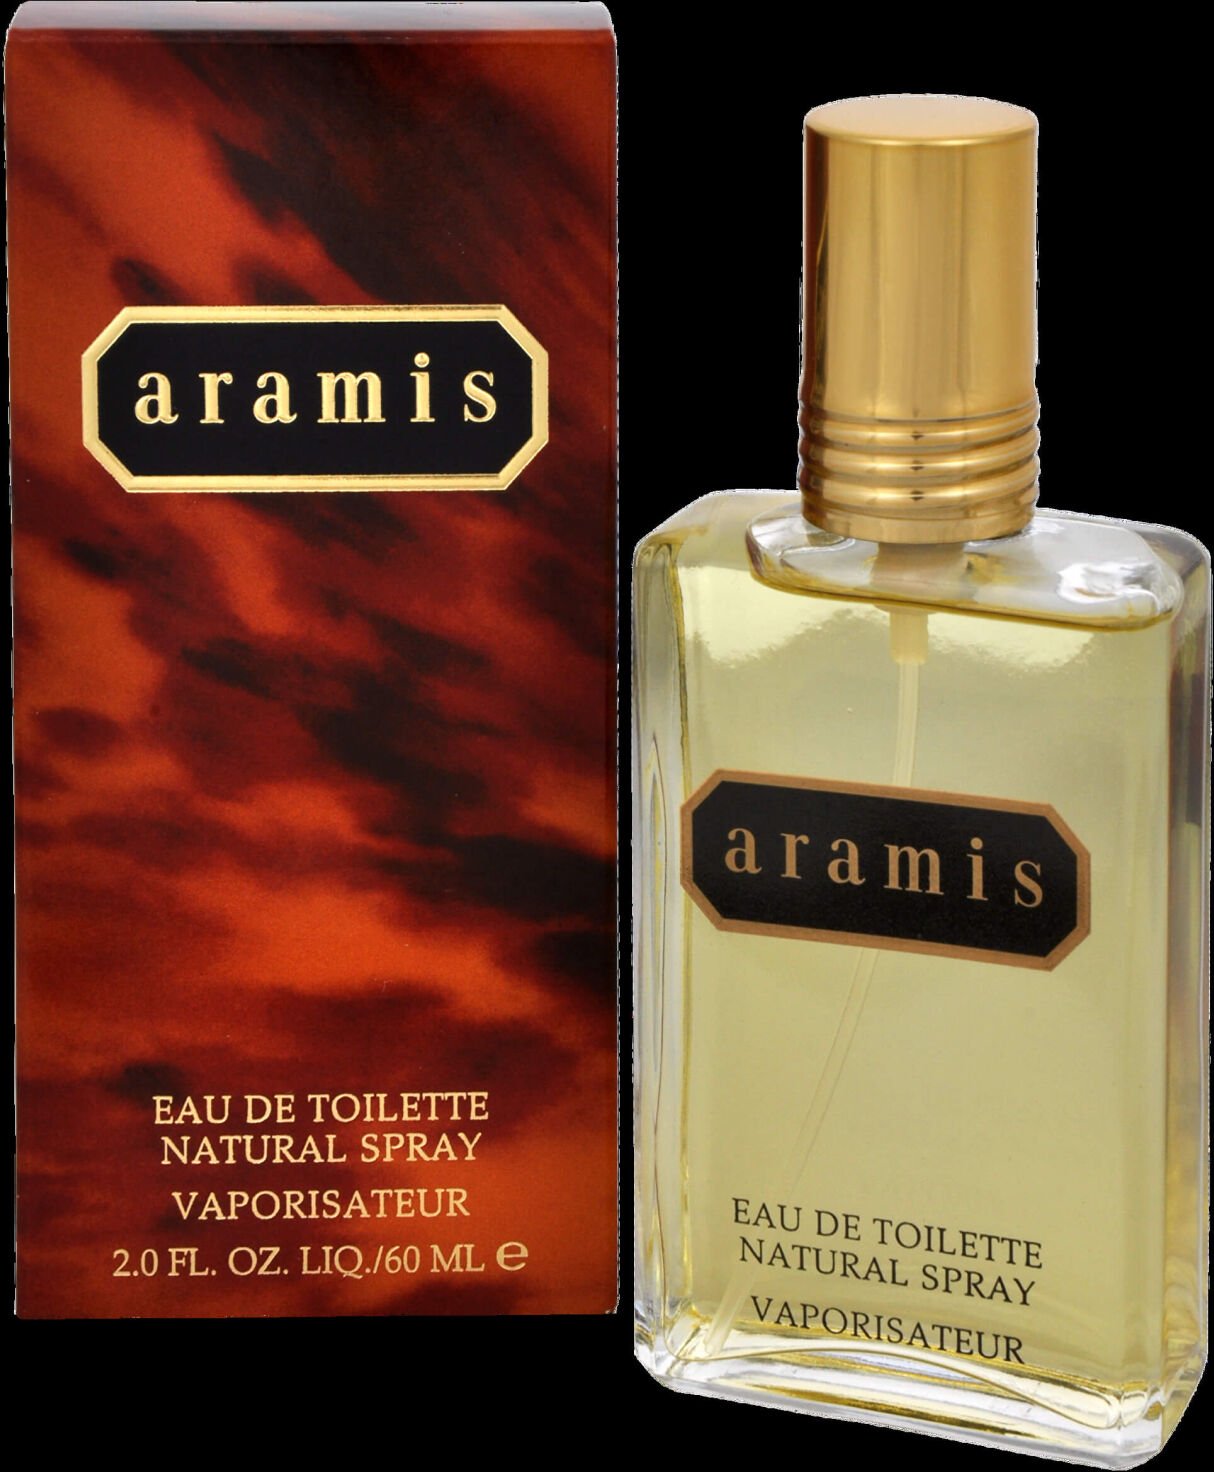 Aramis Aramis For Men - toaletní voda s rozprašovačem 110 ml